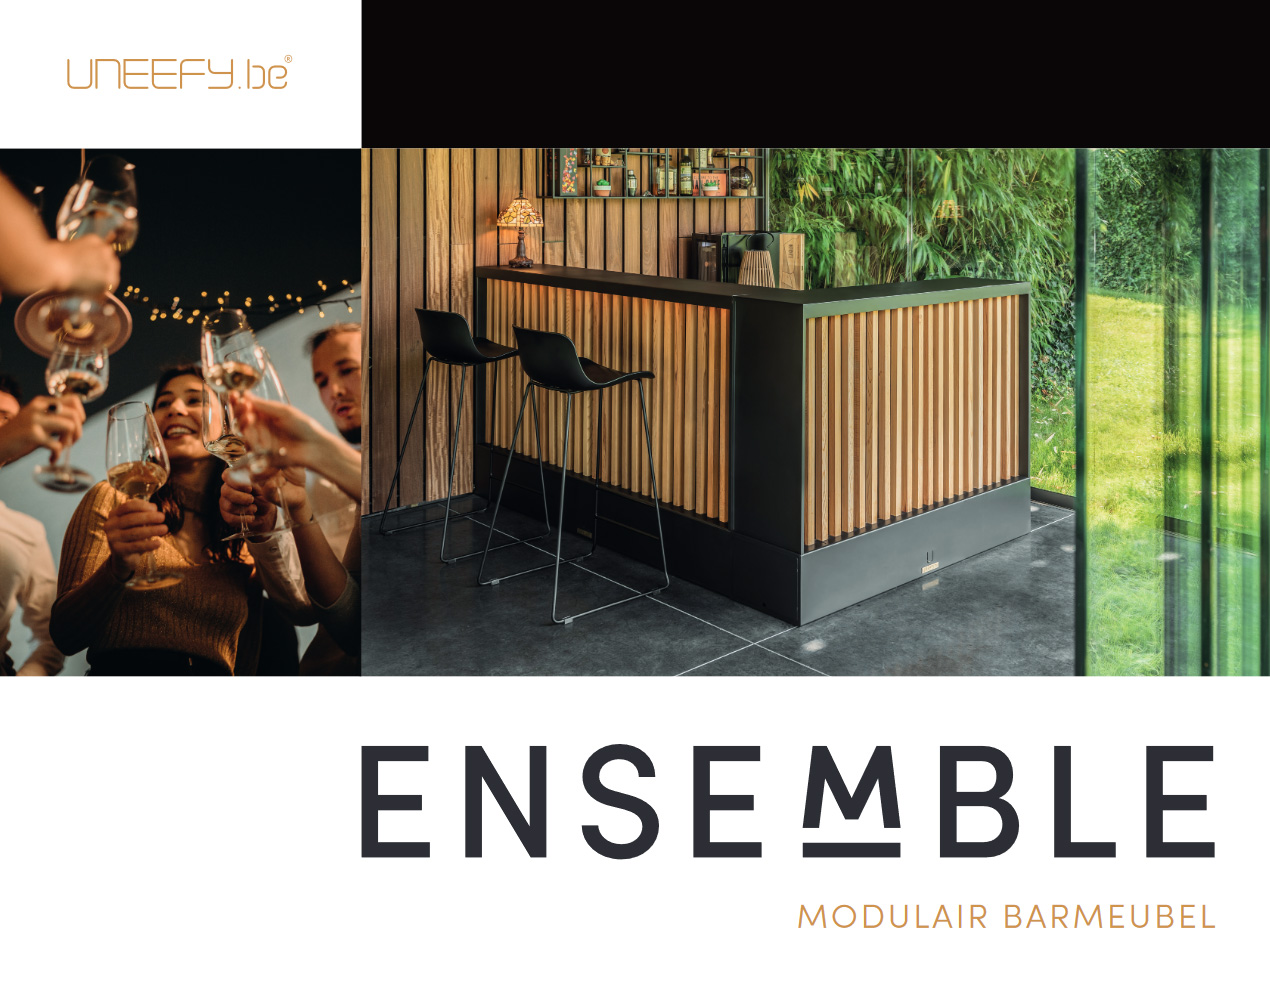 Ensemble modulair barmeubel